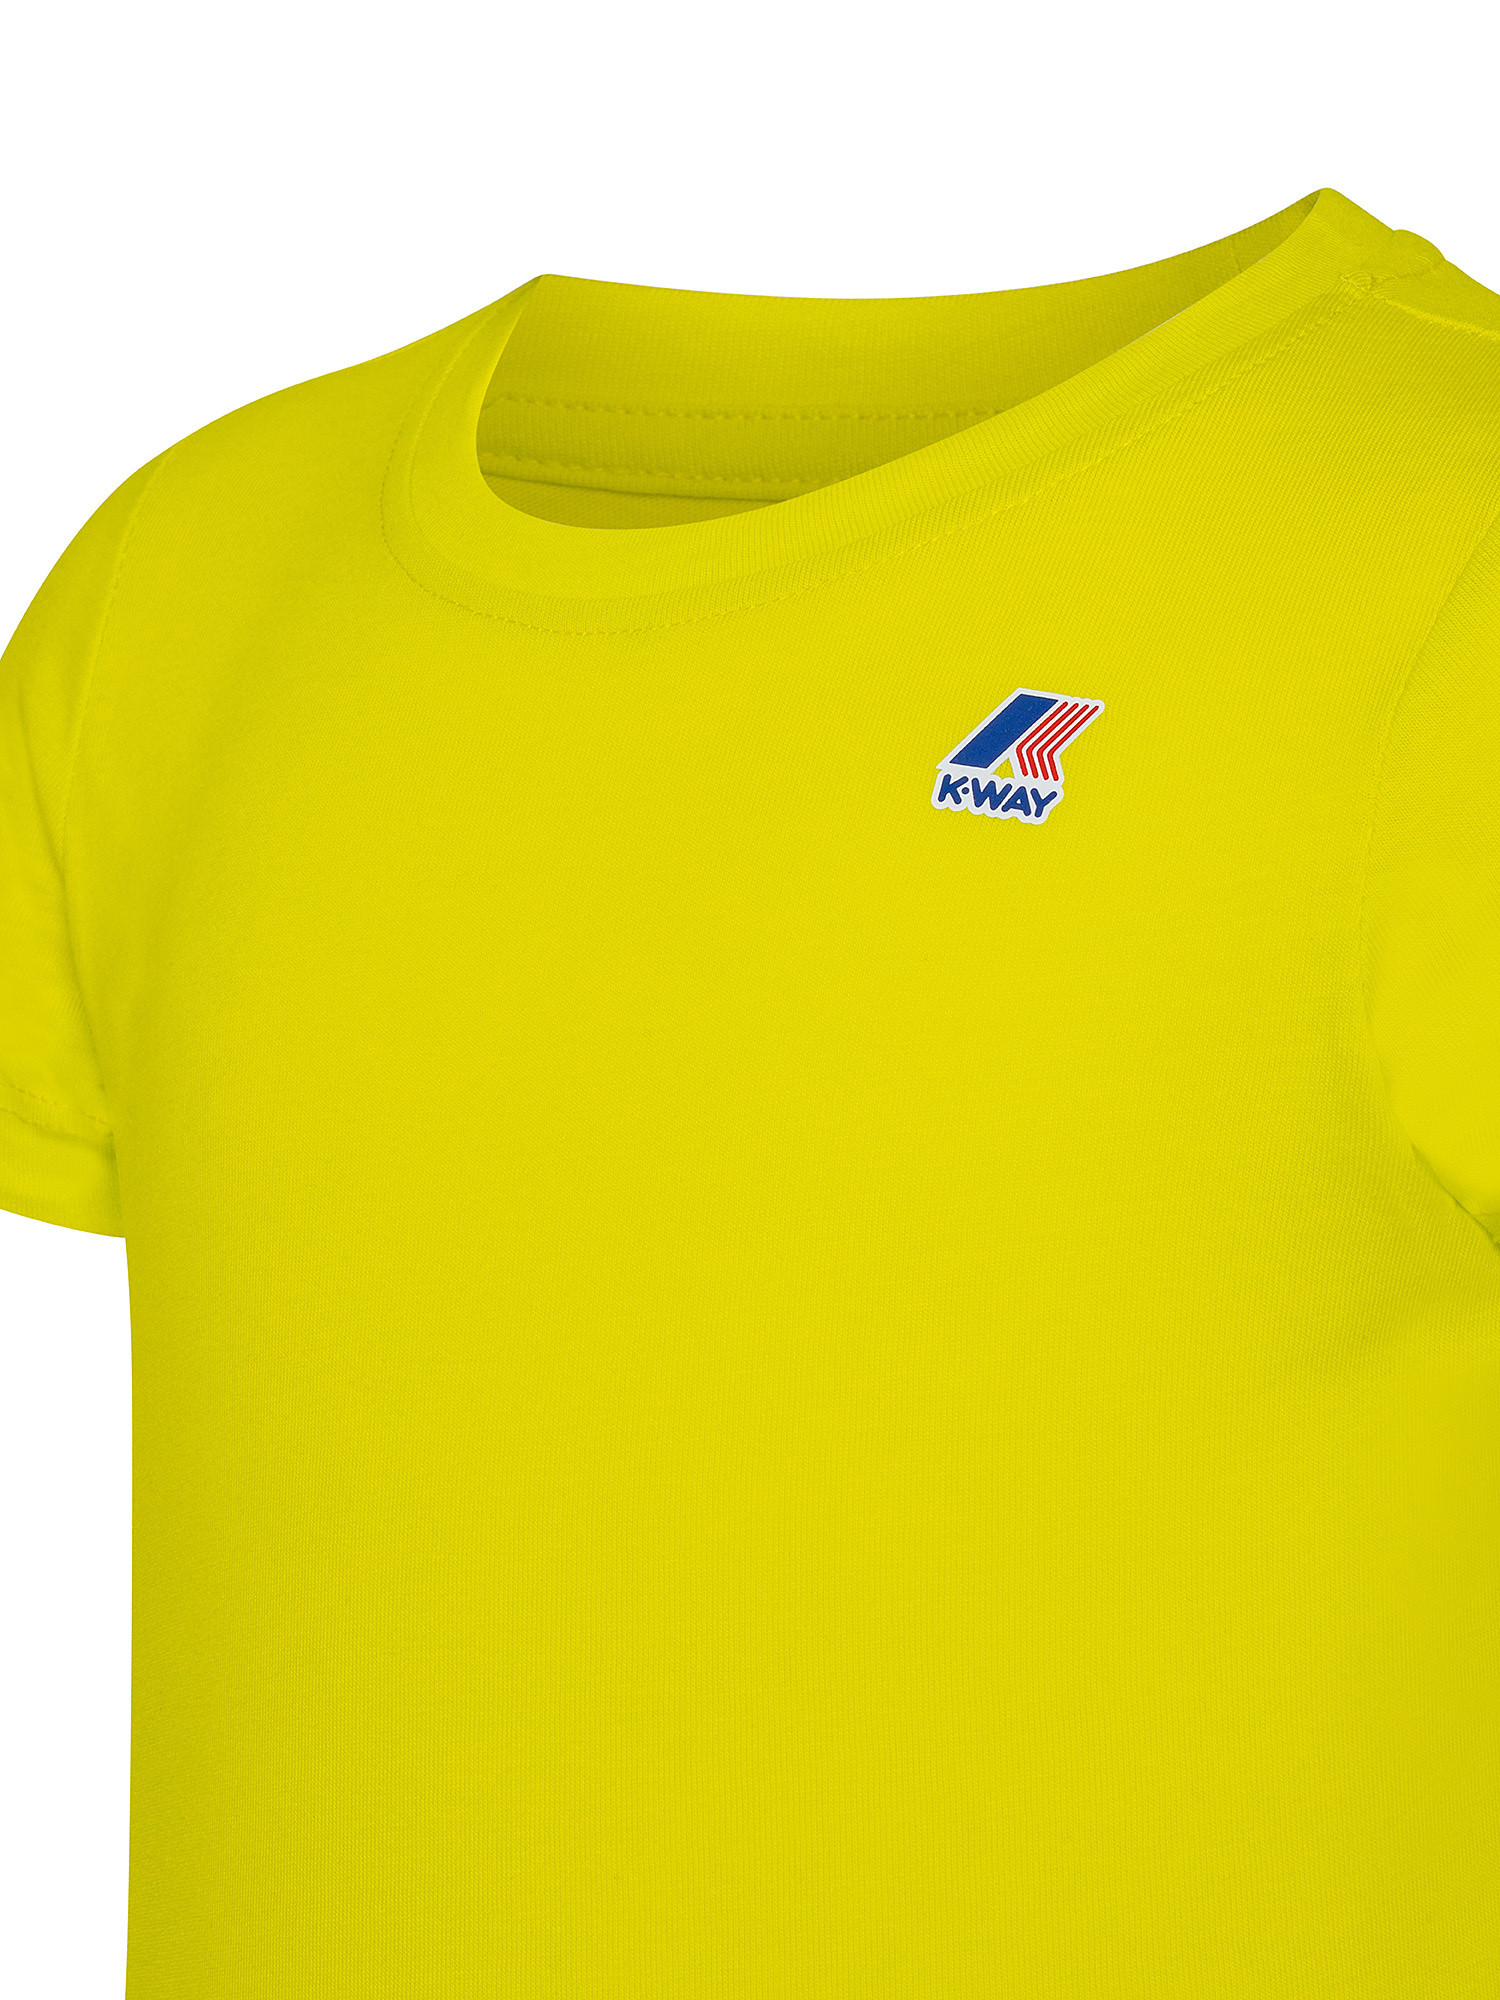 Regular fit boy's T-shirt, Yellow, large image number 2